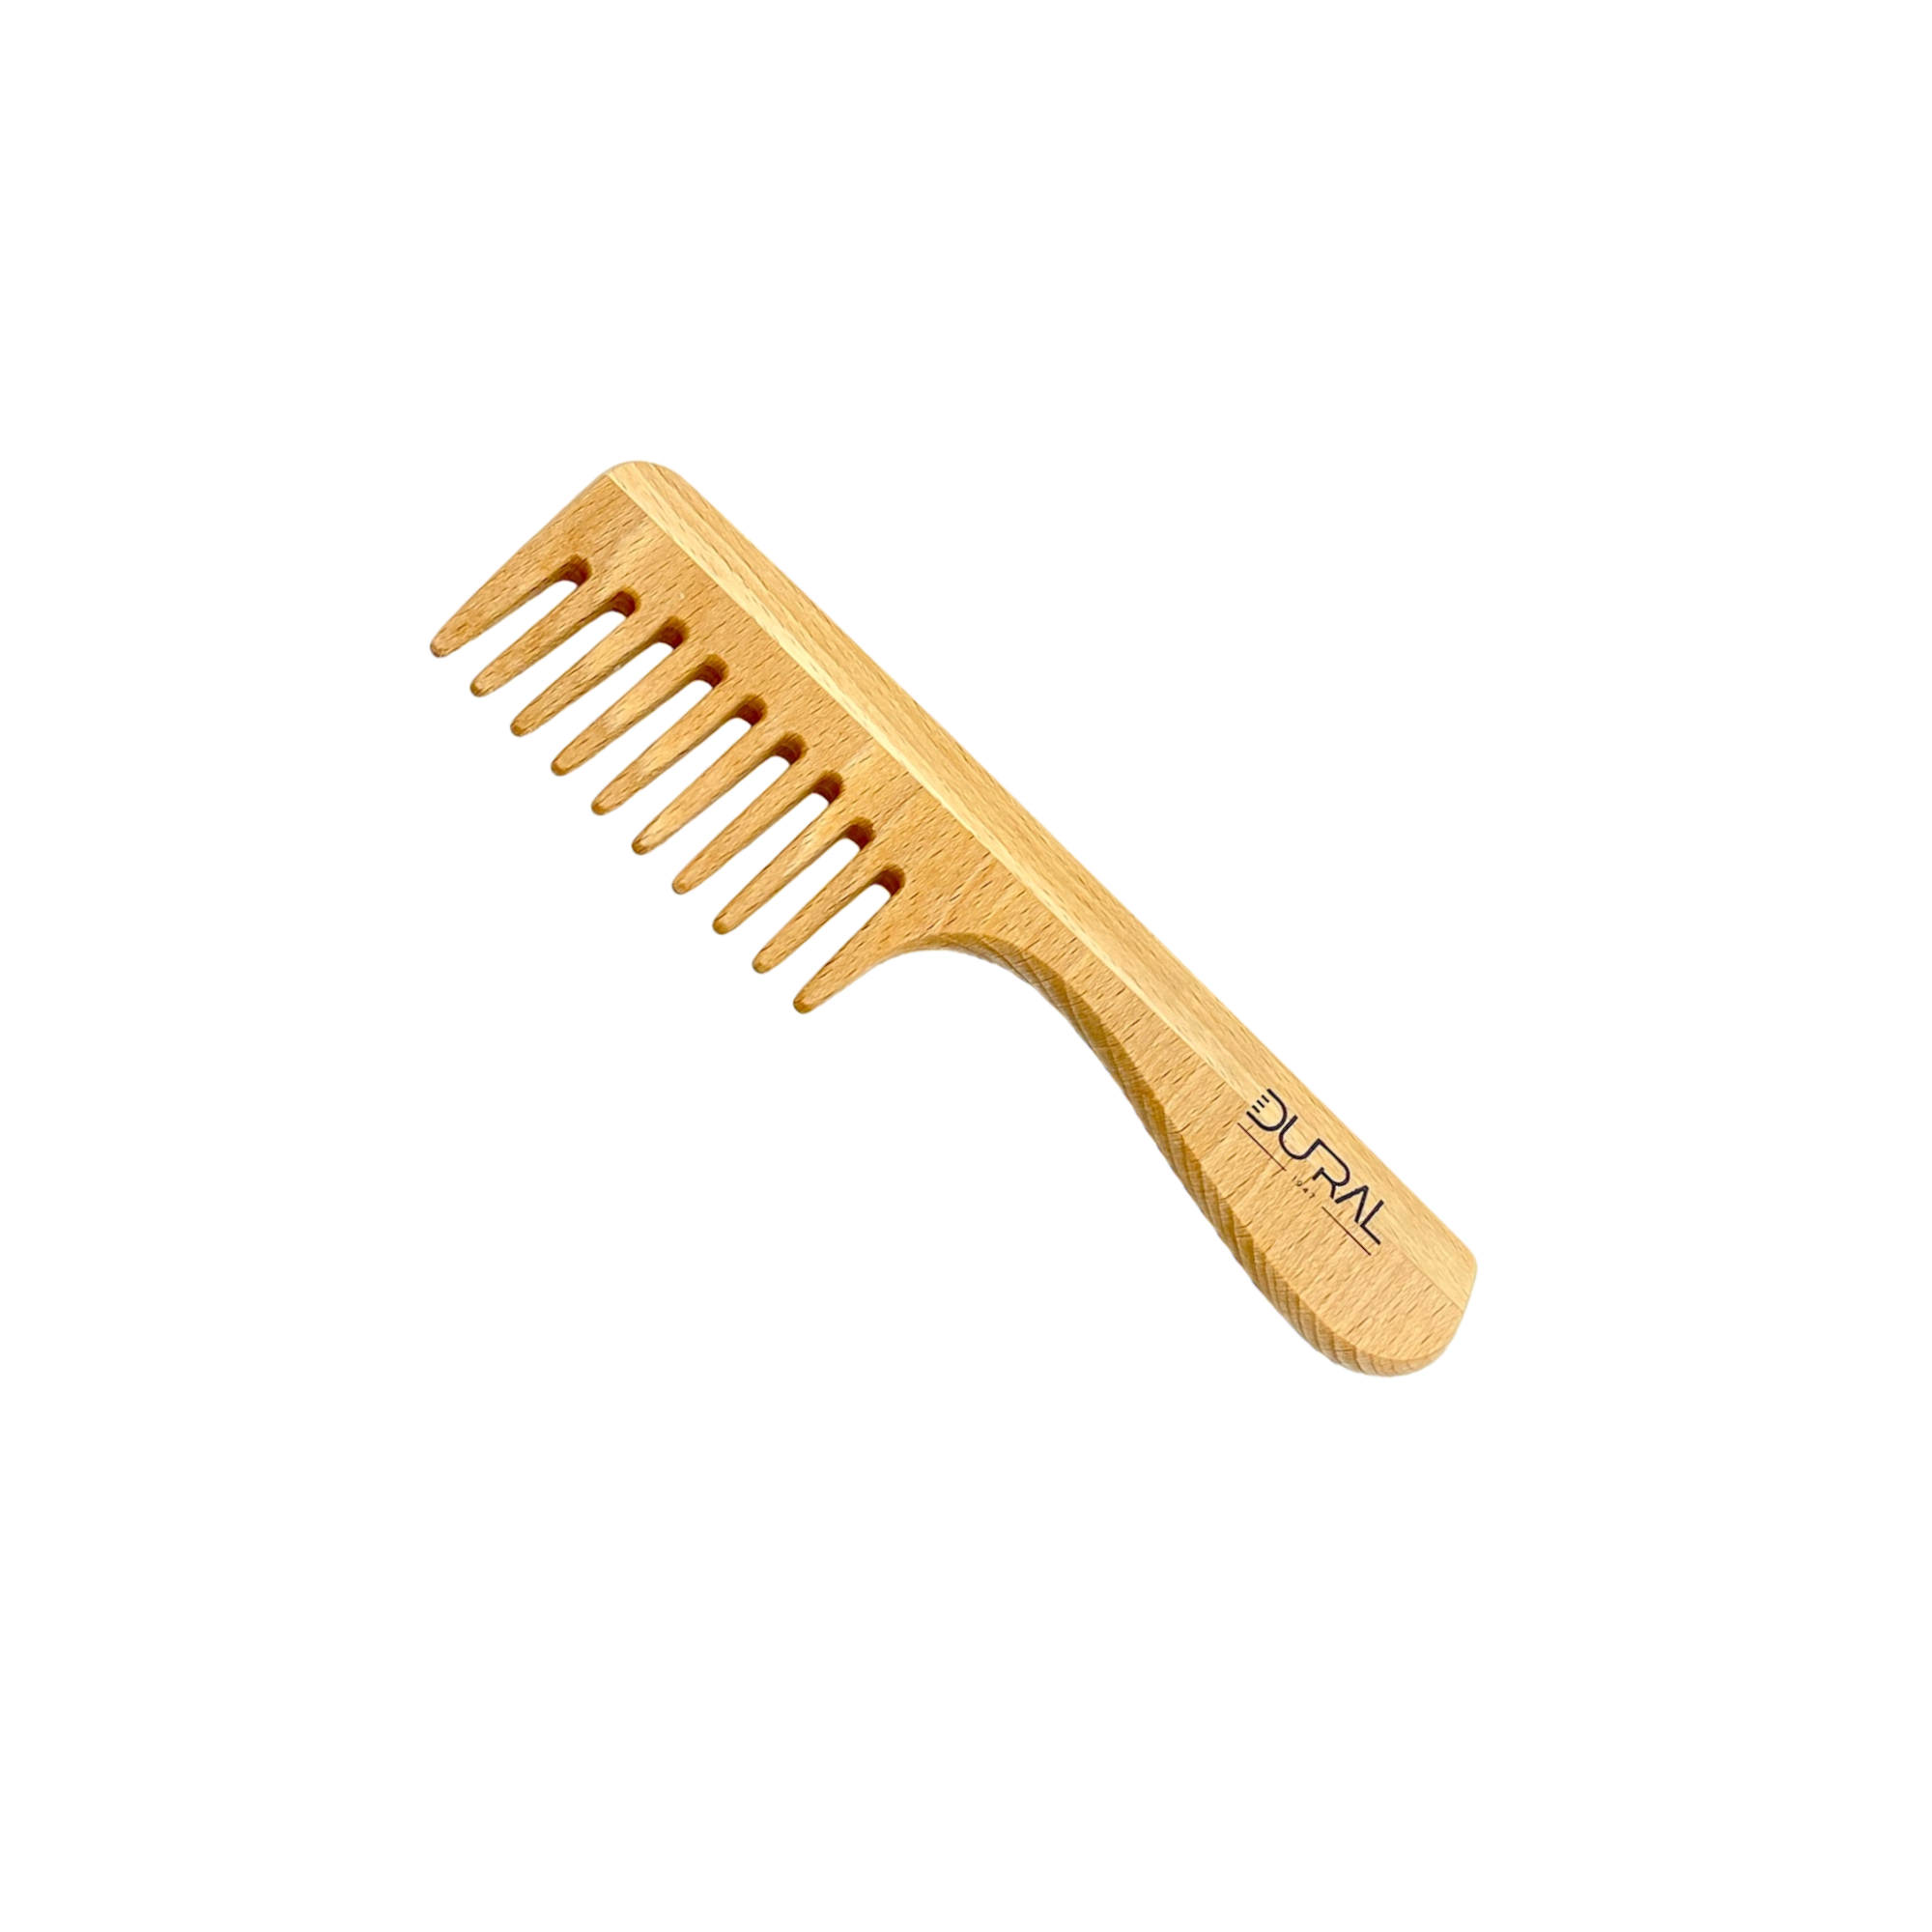 Dural Beech wood grip comb